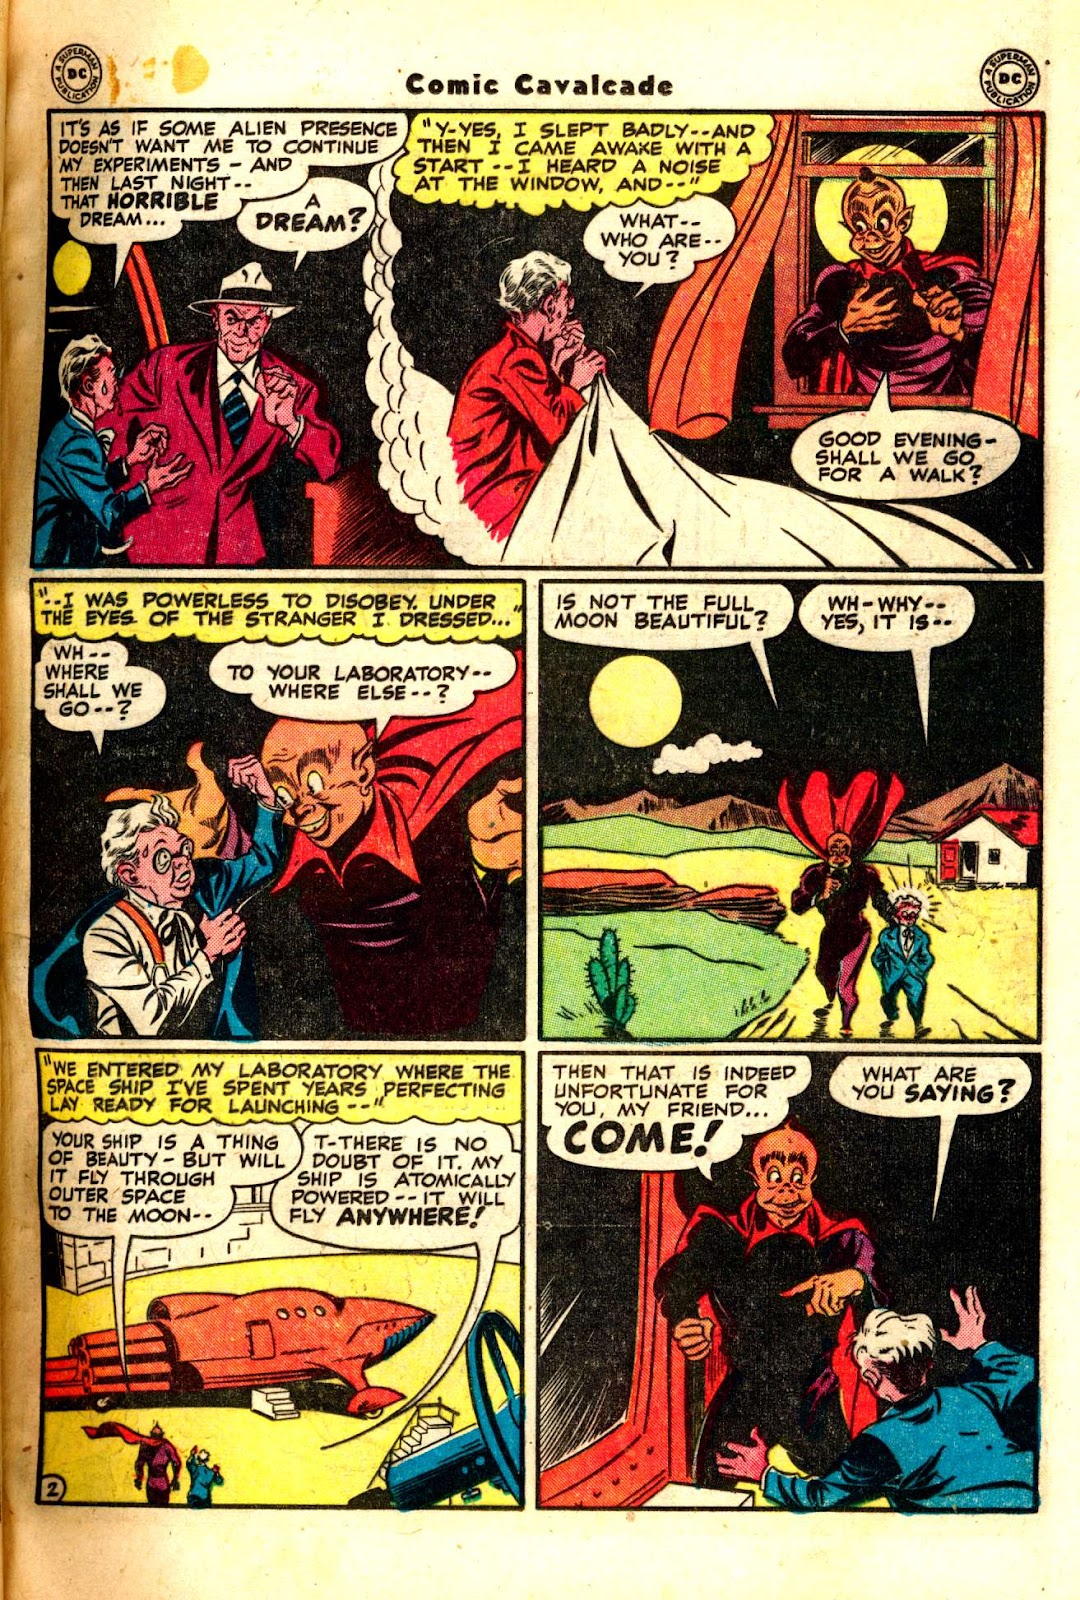 Comic Cavalcade issue 24 - Page 19